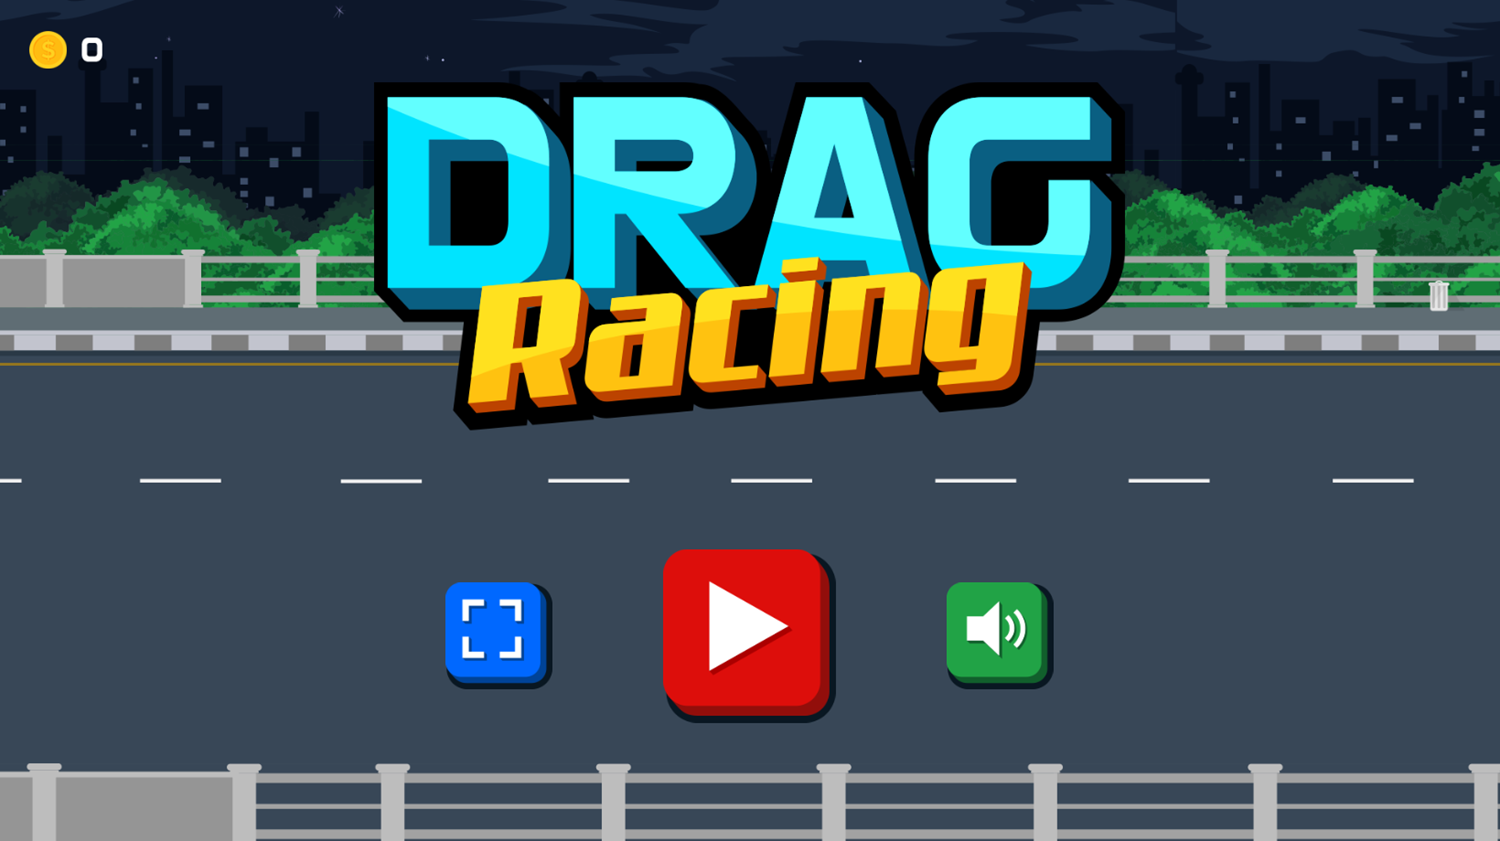 Drag Racing Game Welcome Screen Screenshot.